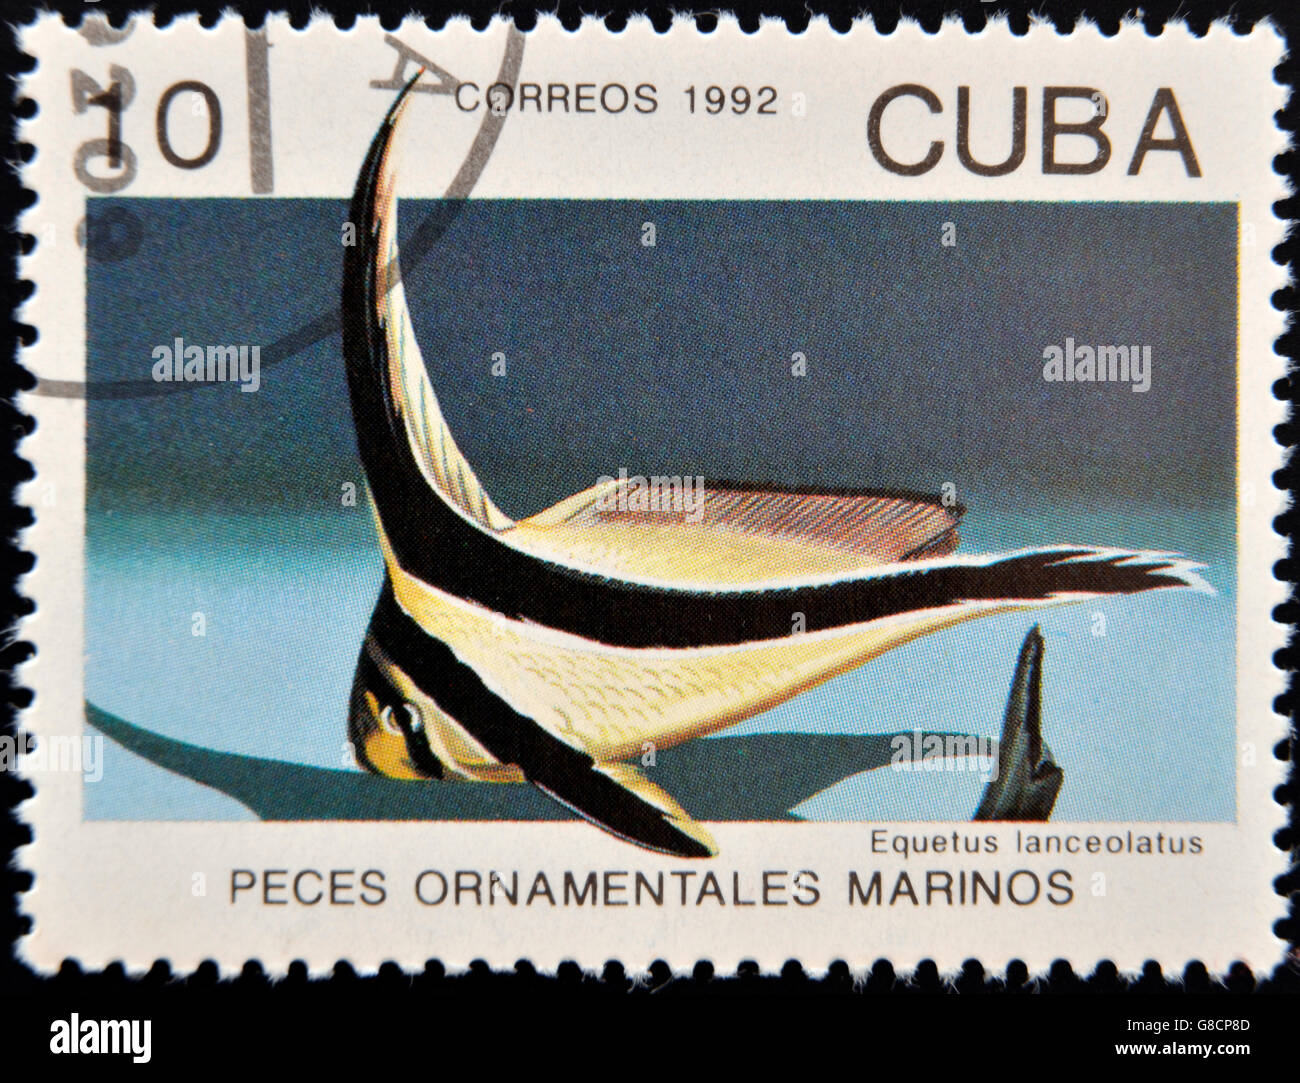 CUBA - CIRCA 1992: A stamp printed in Cuba dedicated to ornamental fish, shows equetus lanceolatus, circa 1992 Stock Photo